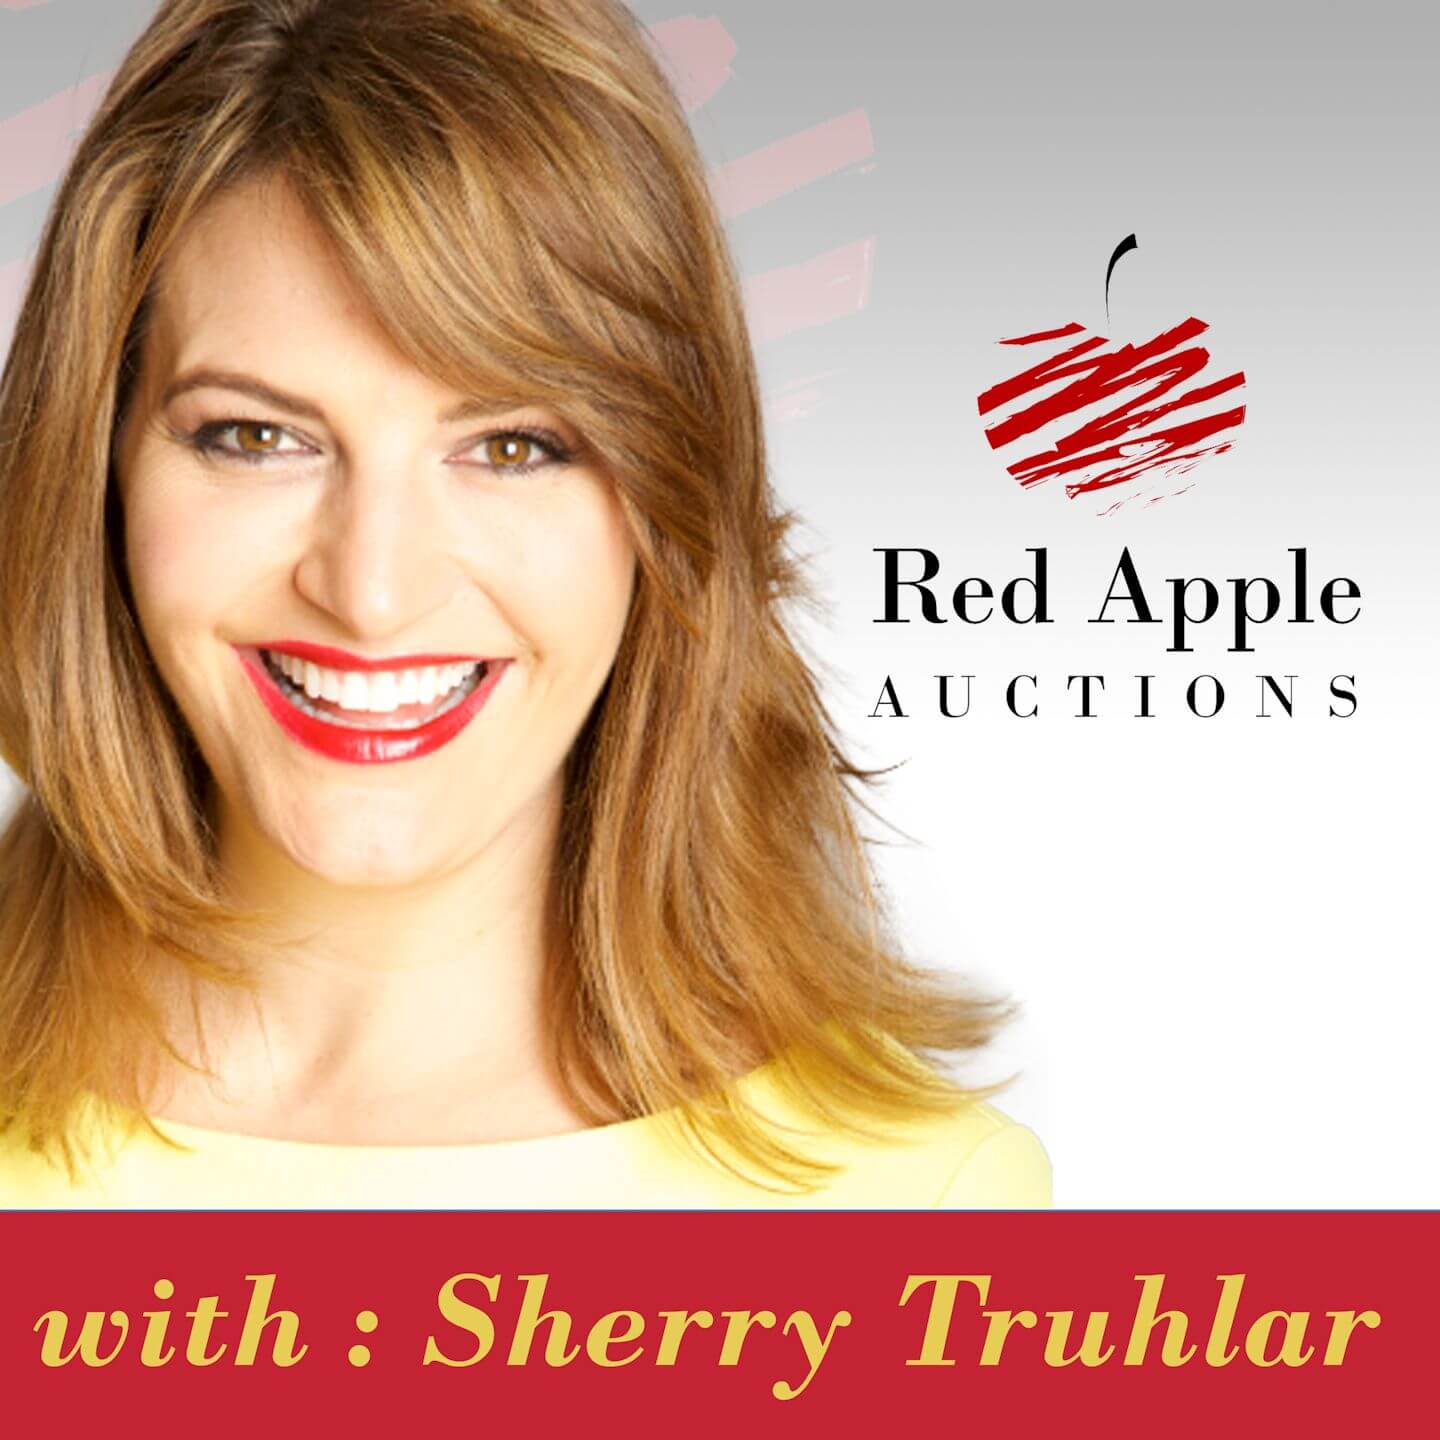 Fundraising gala auctioneer Sherry Truhlar